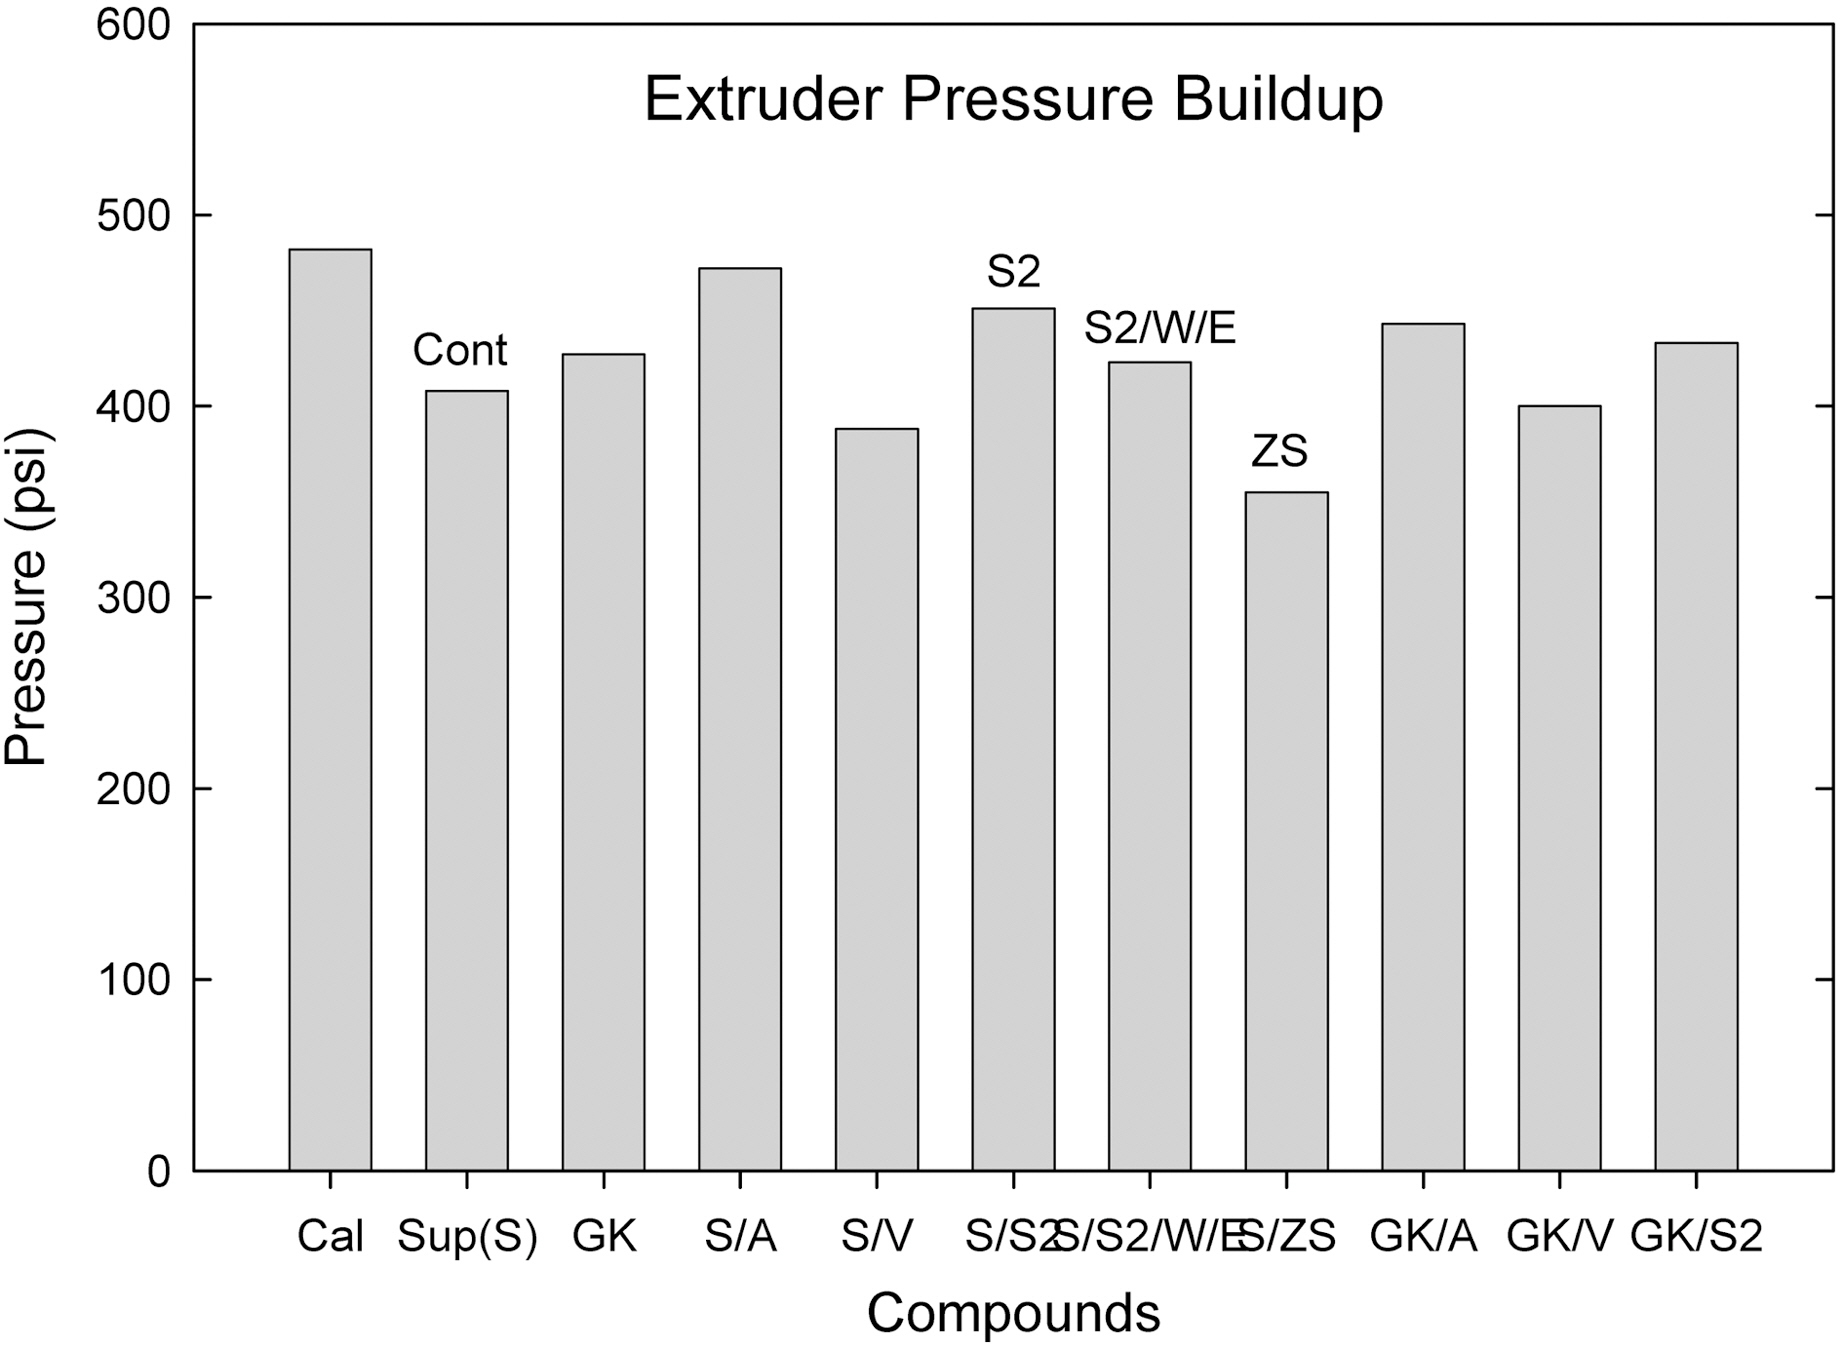 Extruder pressure (psi) buildup of each compound.